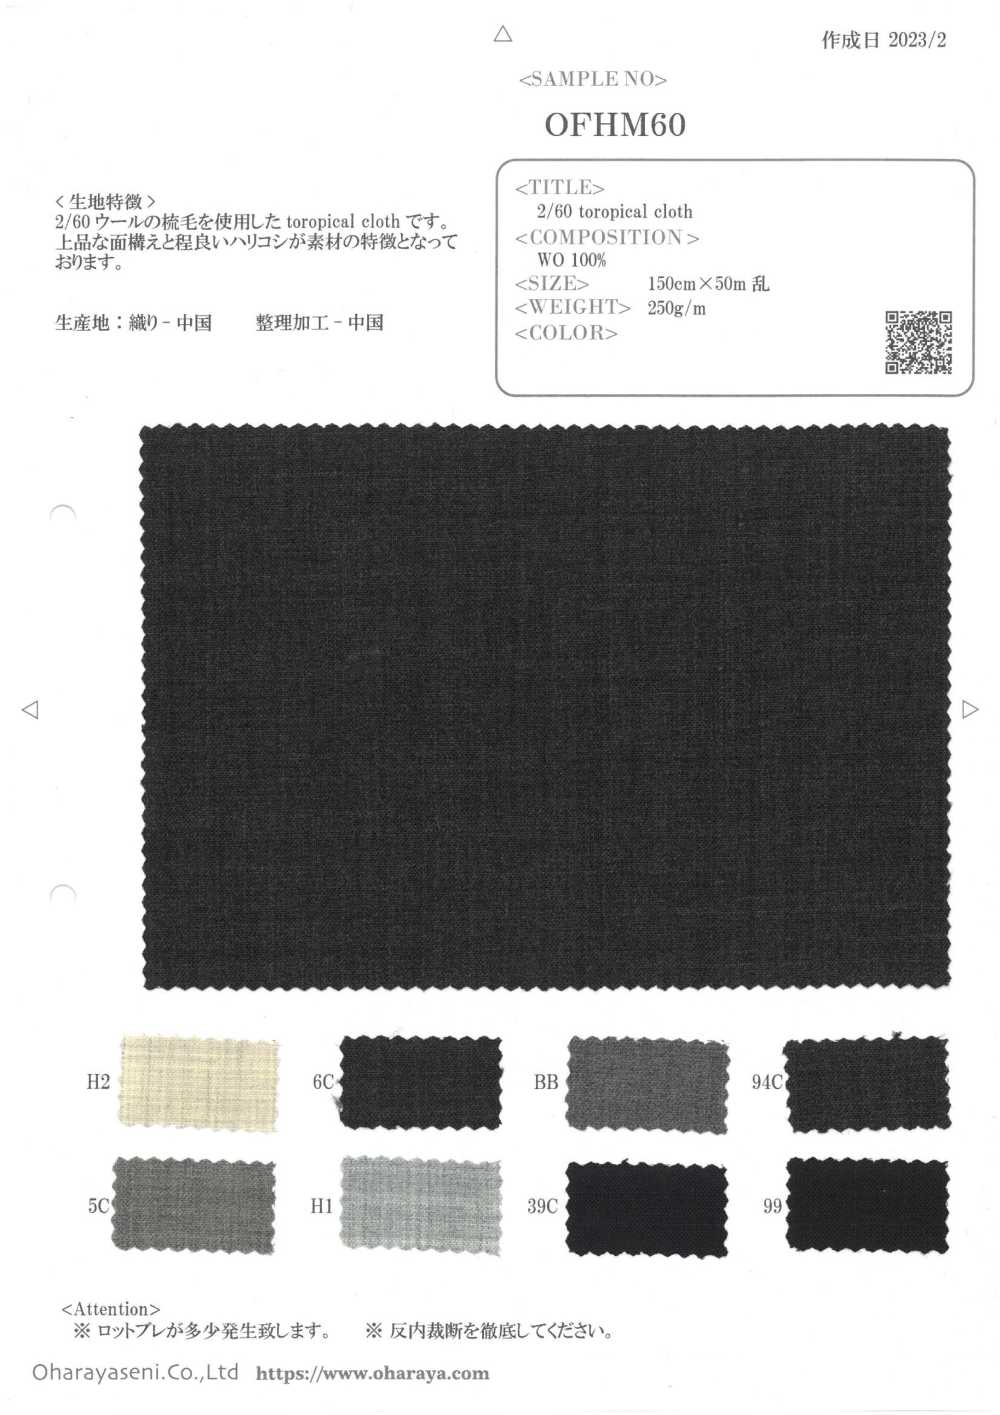 OFHM60 2/60 Tropical Cloth[Textile / Fabric] Oharayaseni